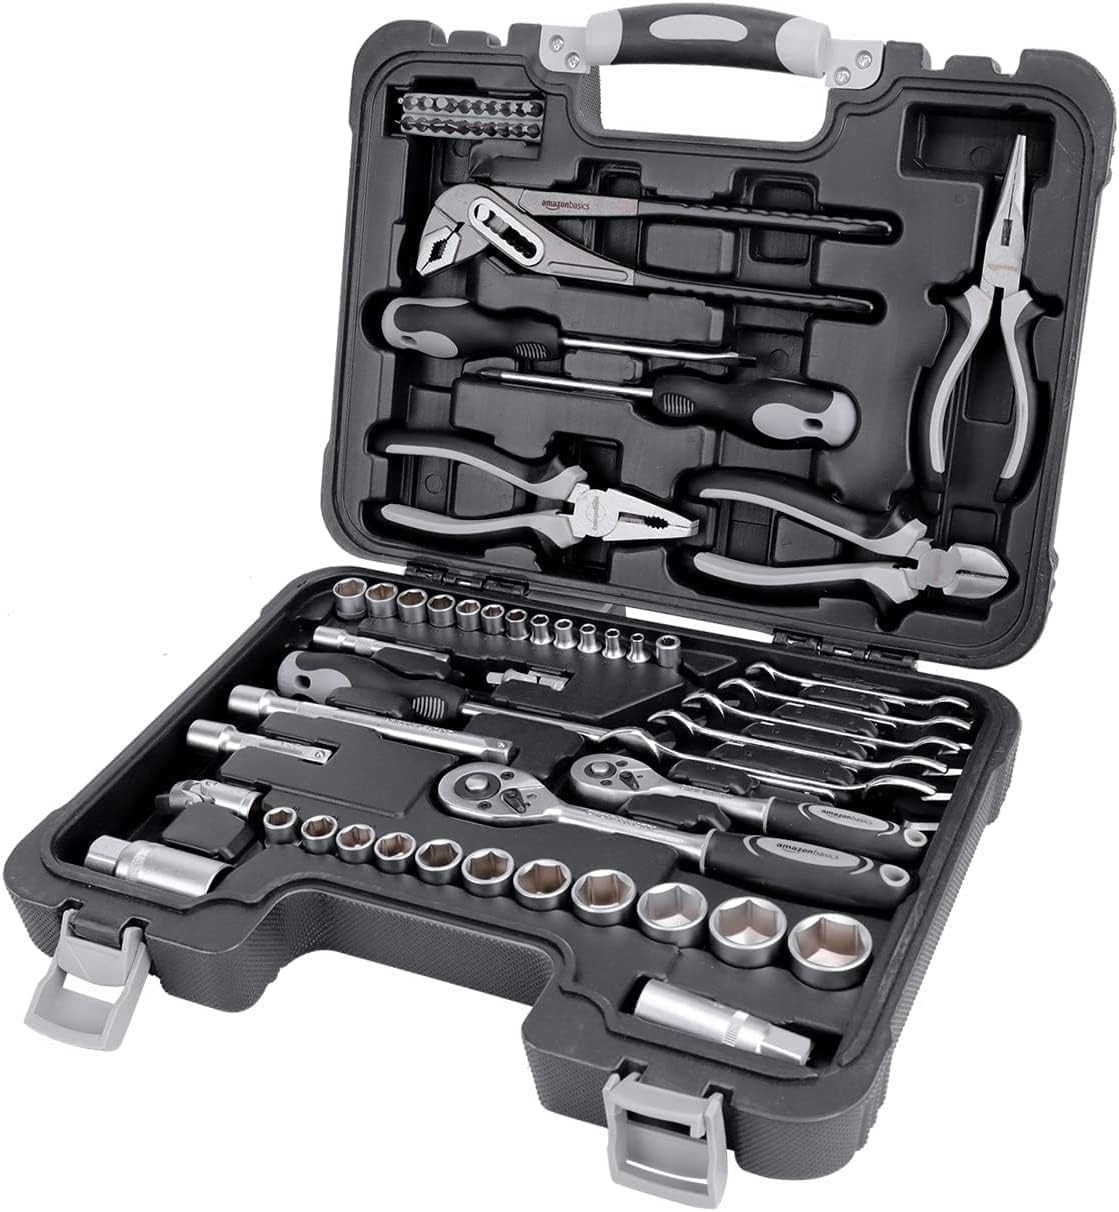 Amazon Basics Household Tool Set, 65 Pieces, Black